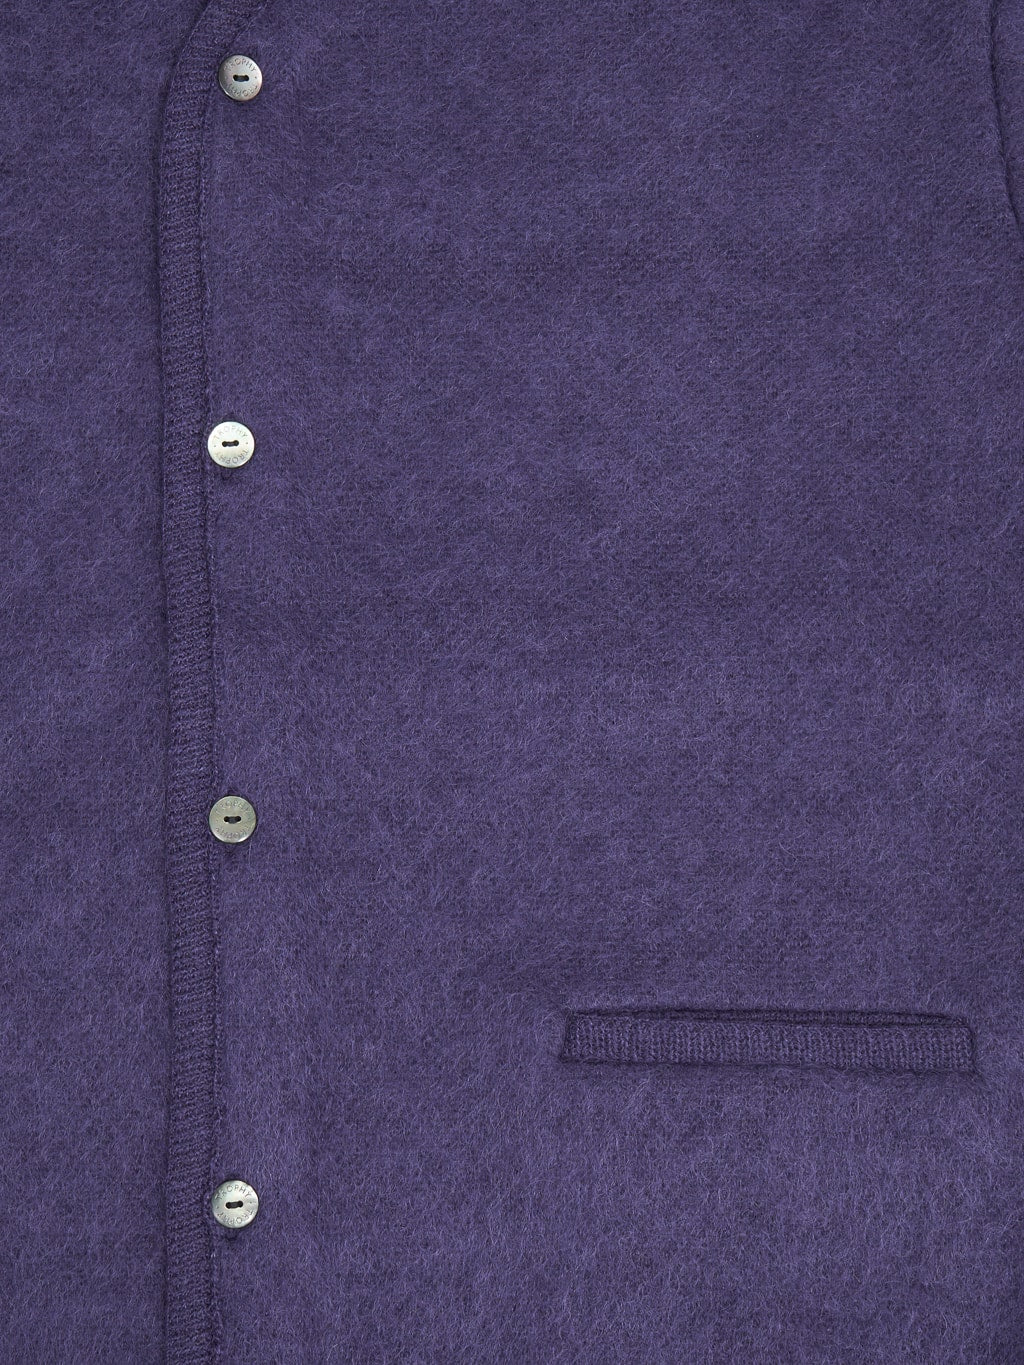 Trophy Clothing Mohair Knit Cardigan Dark Purple pocket